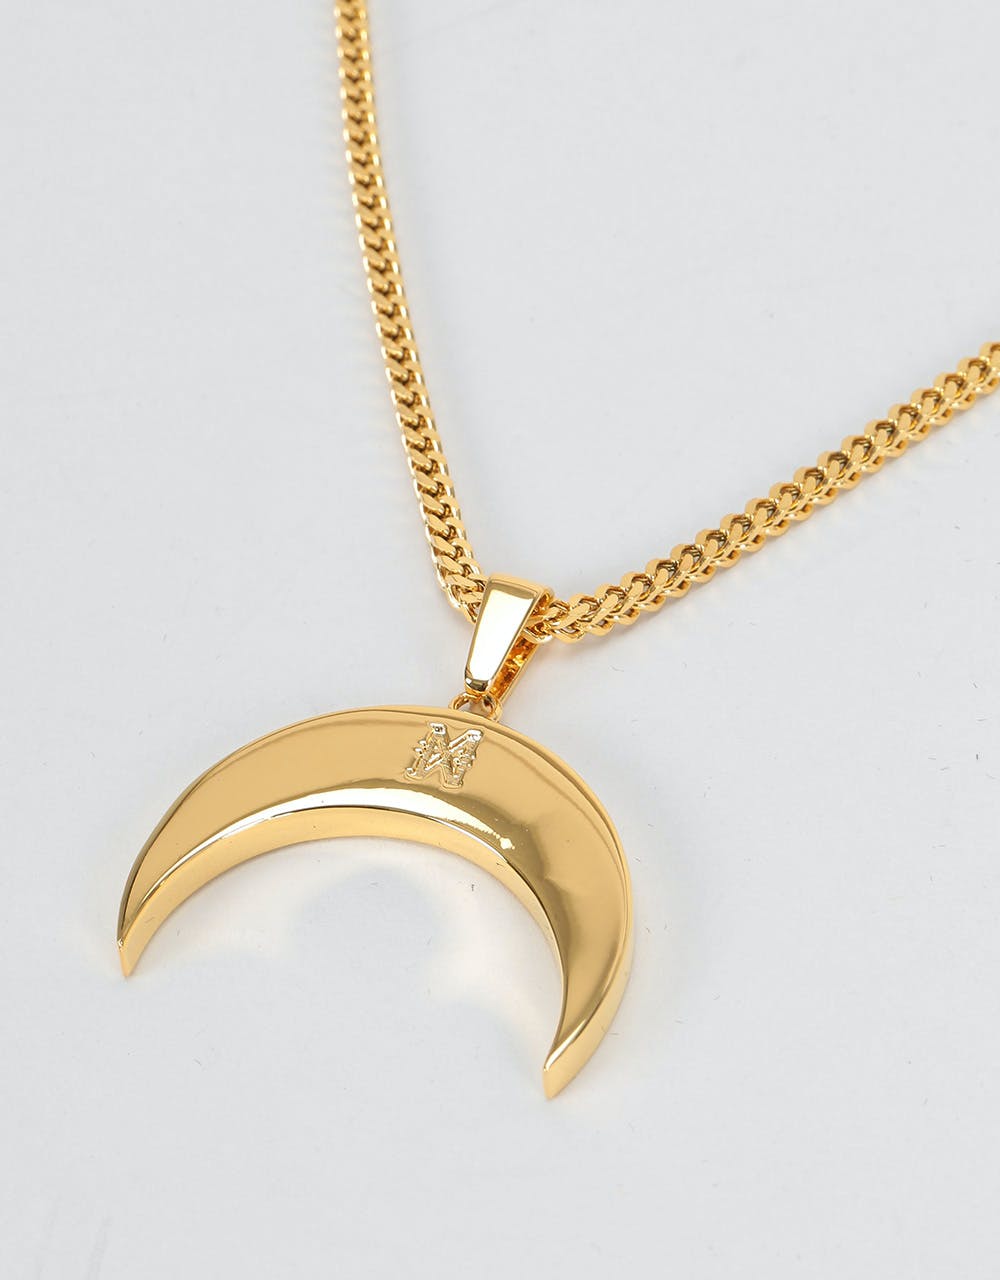 Midvs Co 18K Gold Plated Luna Necklace - Gold